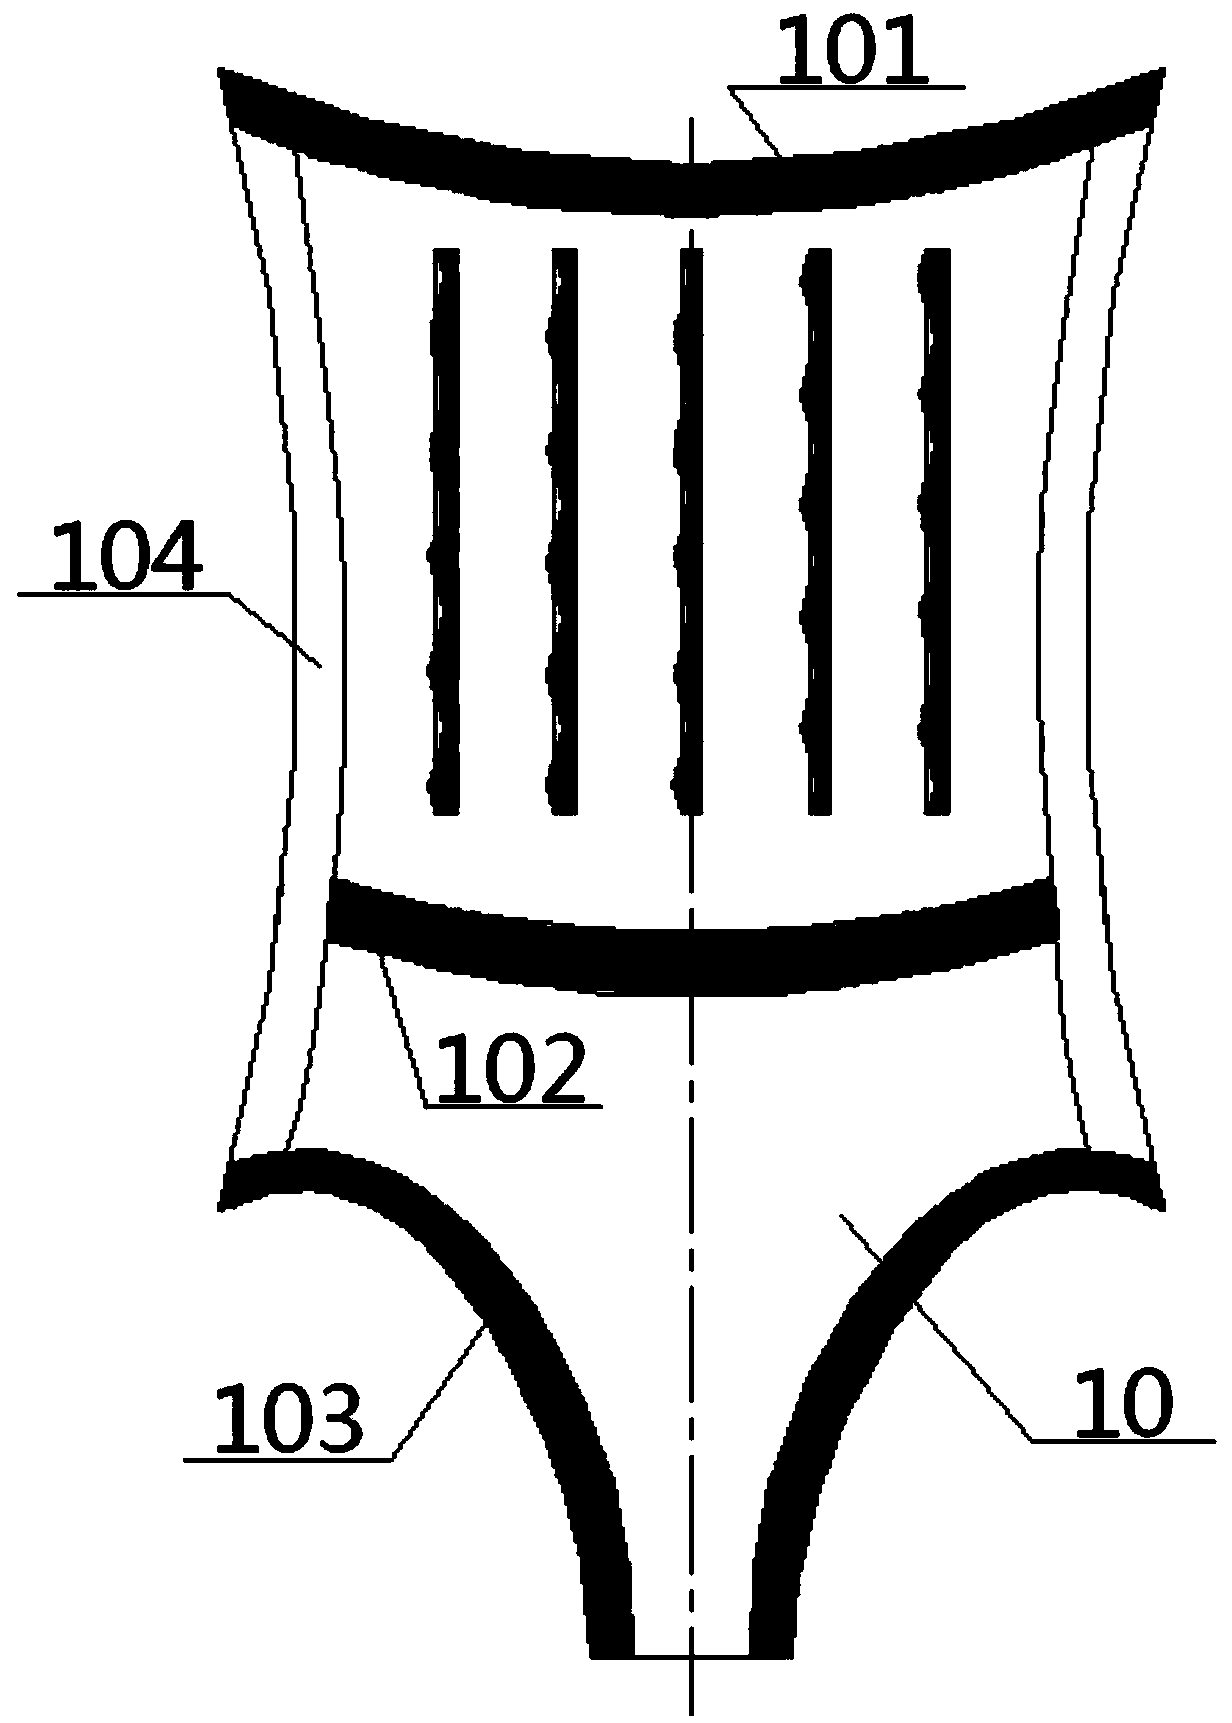 Preparation process of screen mesh corset